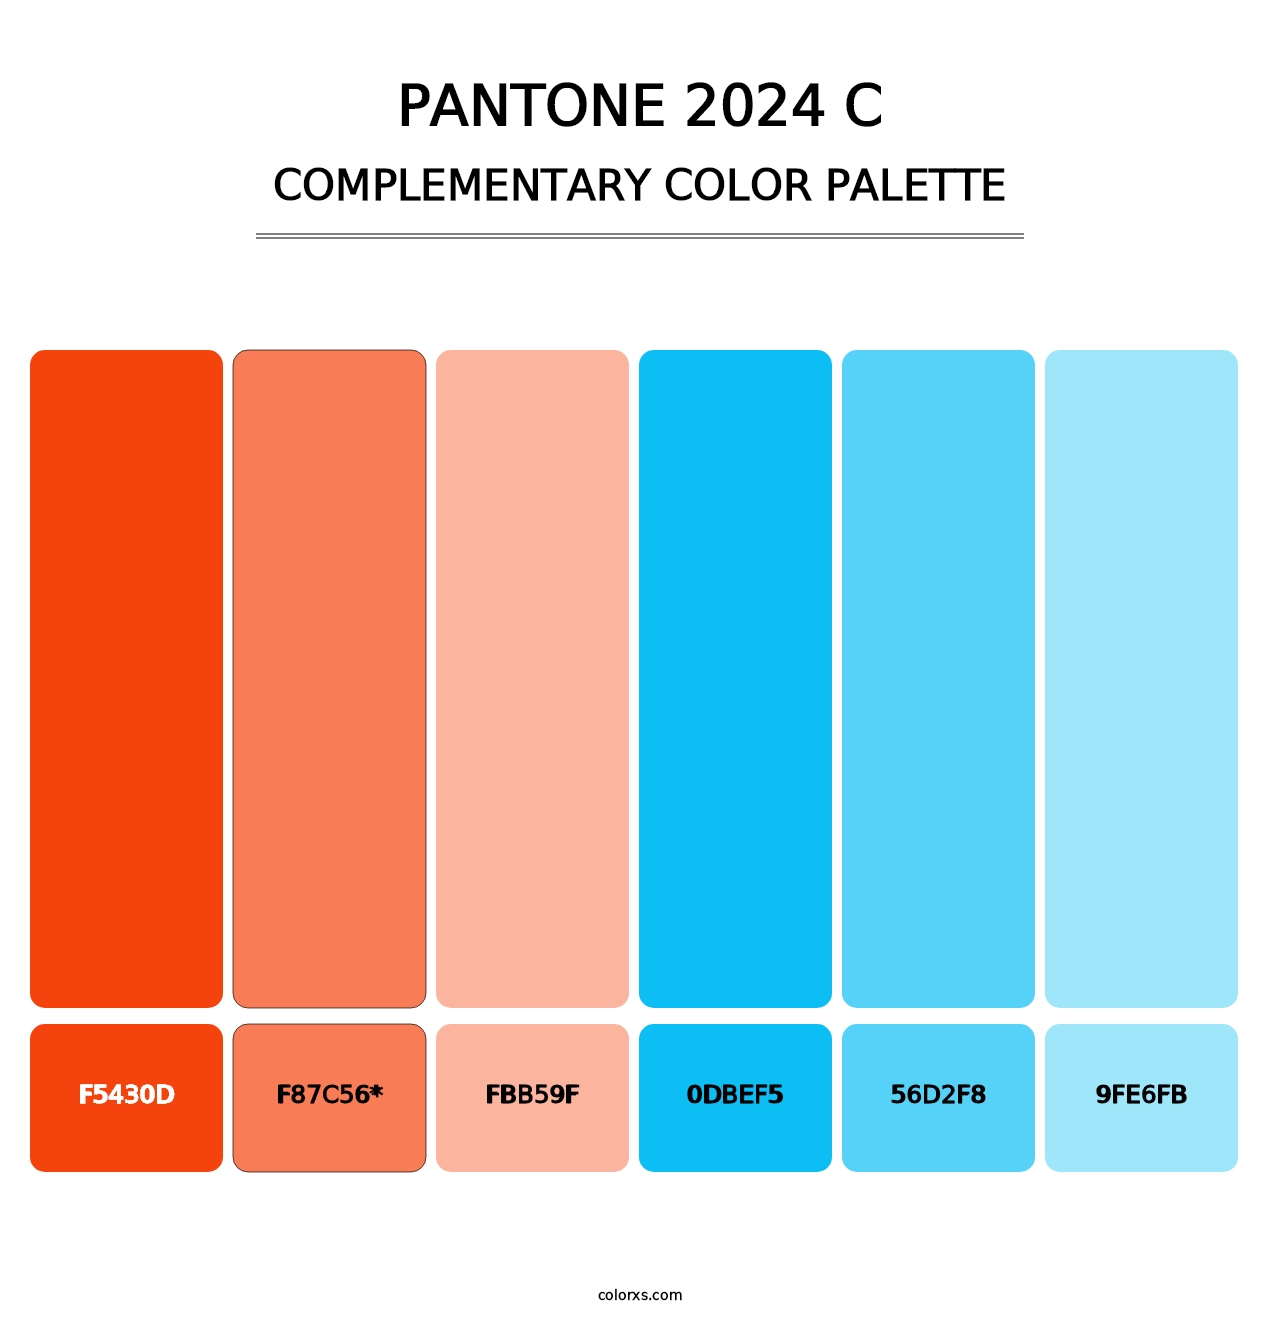 PANTONE 2024 C - Complementary Color Palette